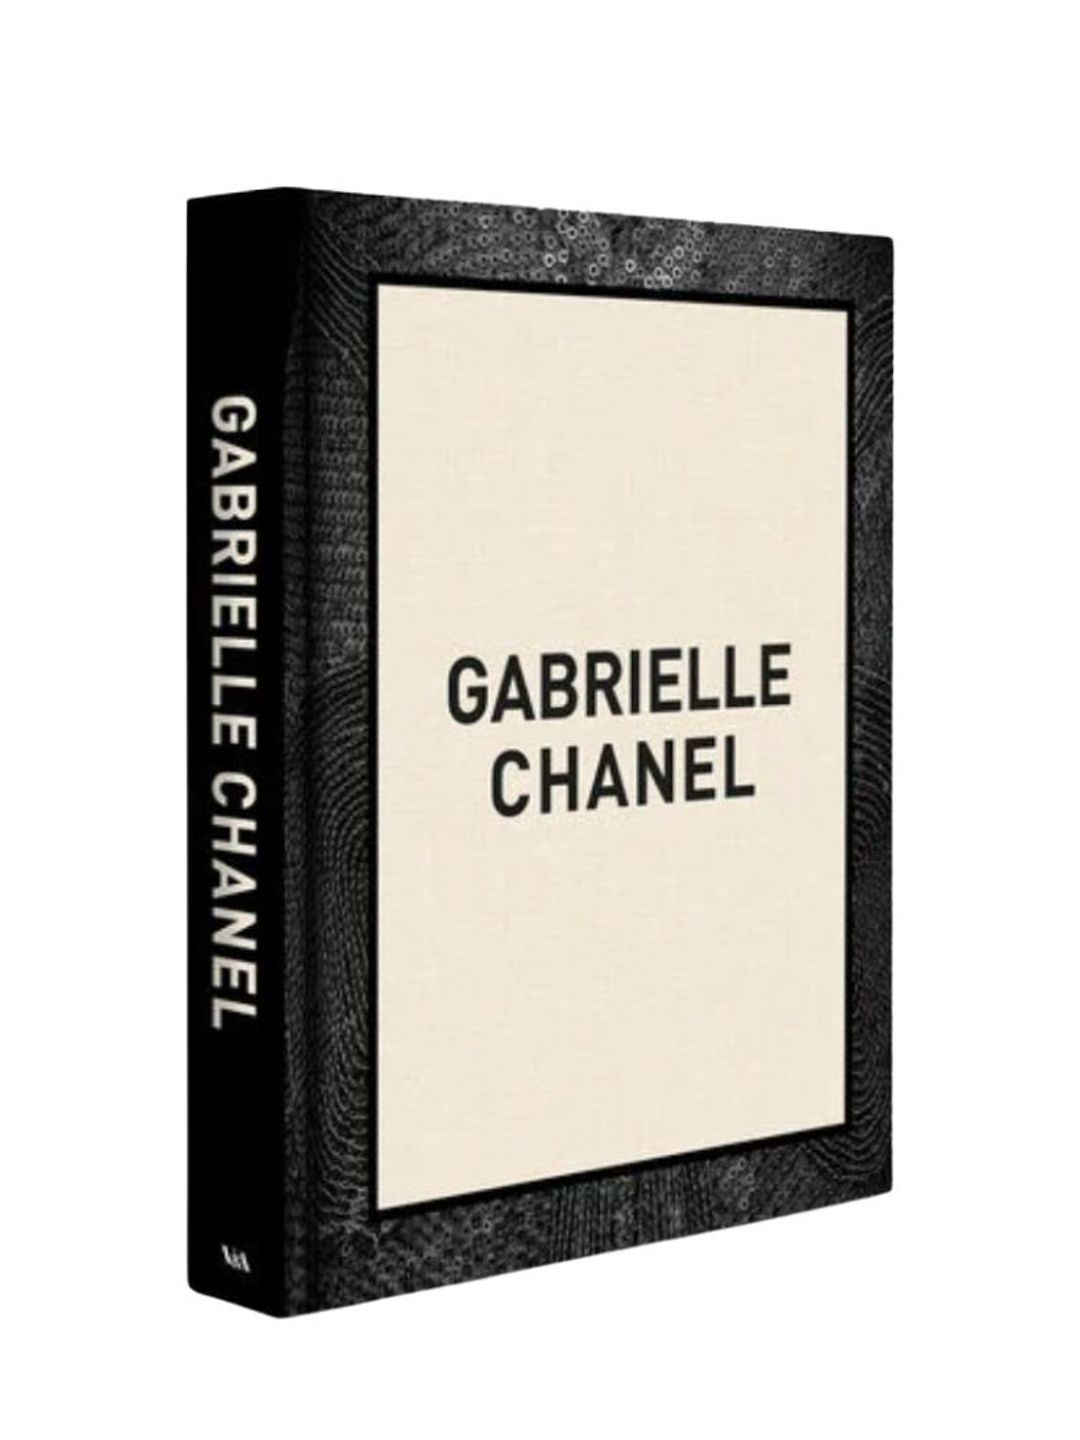 Gabrielle Chanel coffee table book 